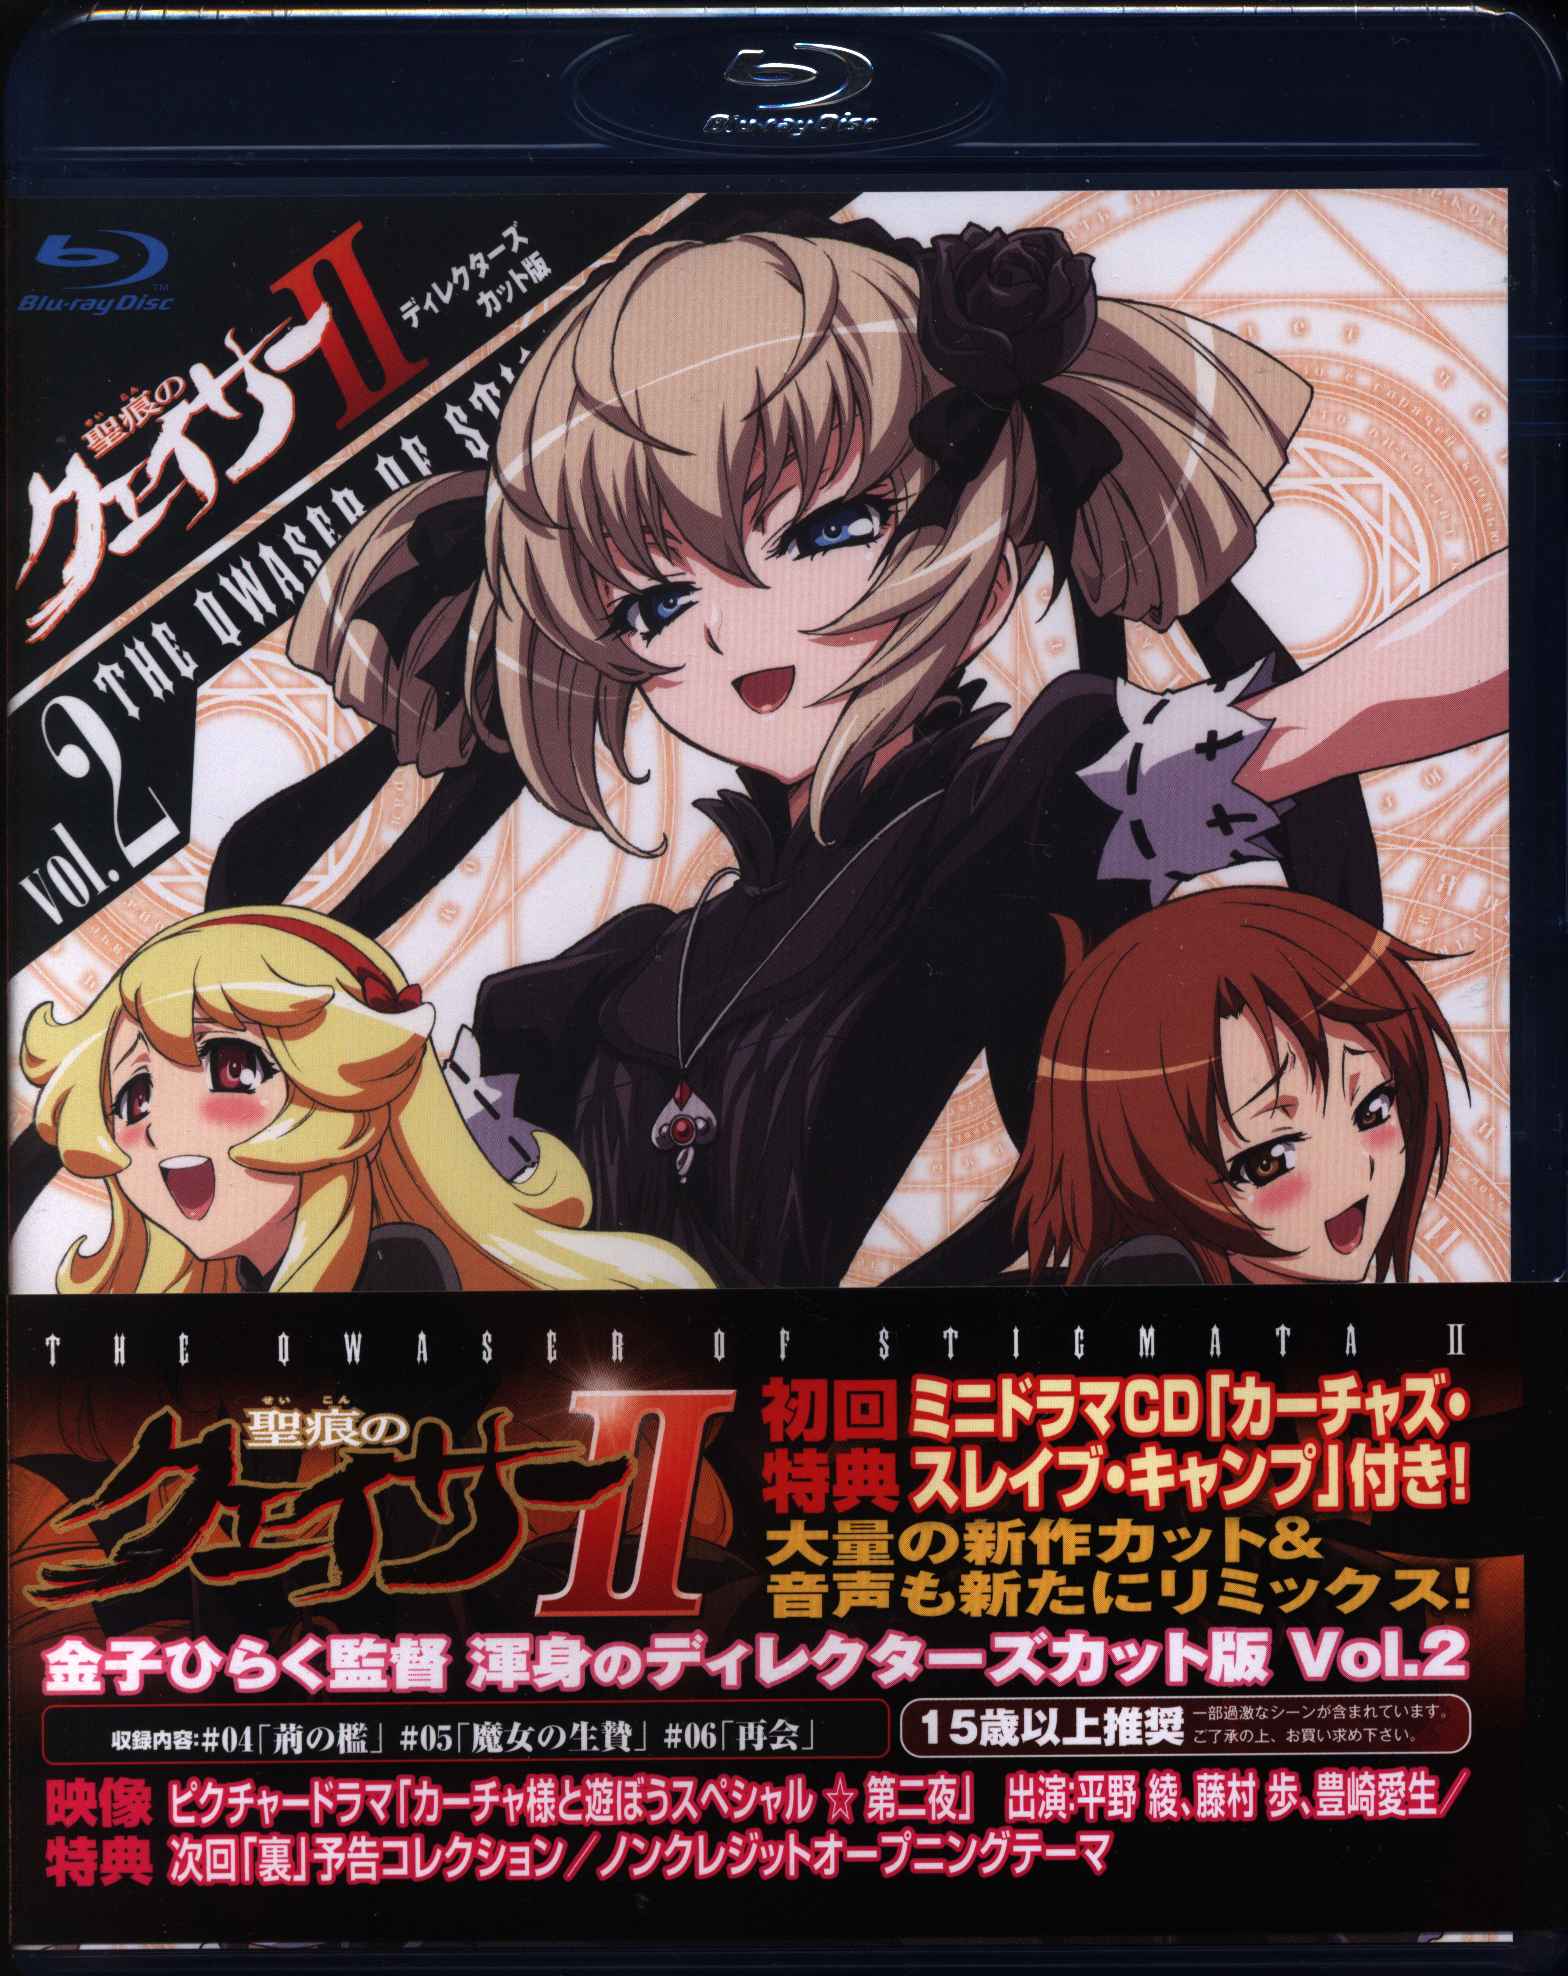 Kotoura-san Vol. 2 Blu-ray (Special Edition